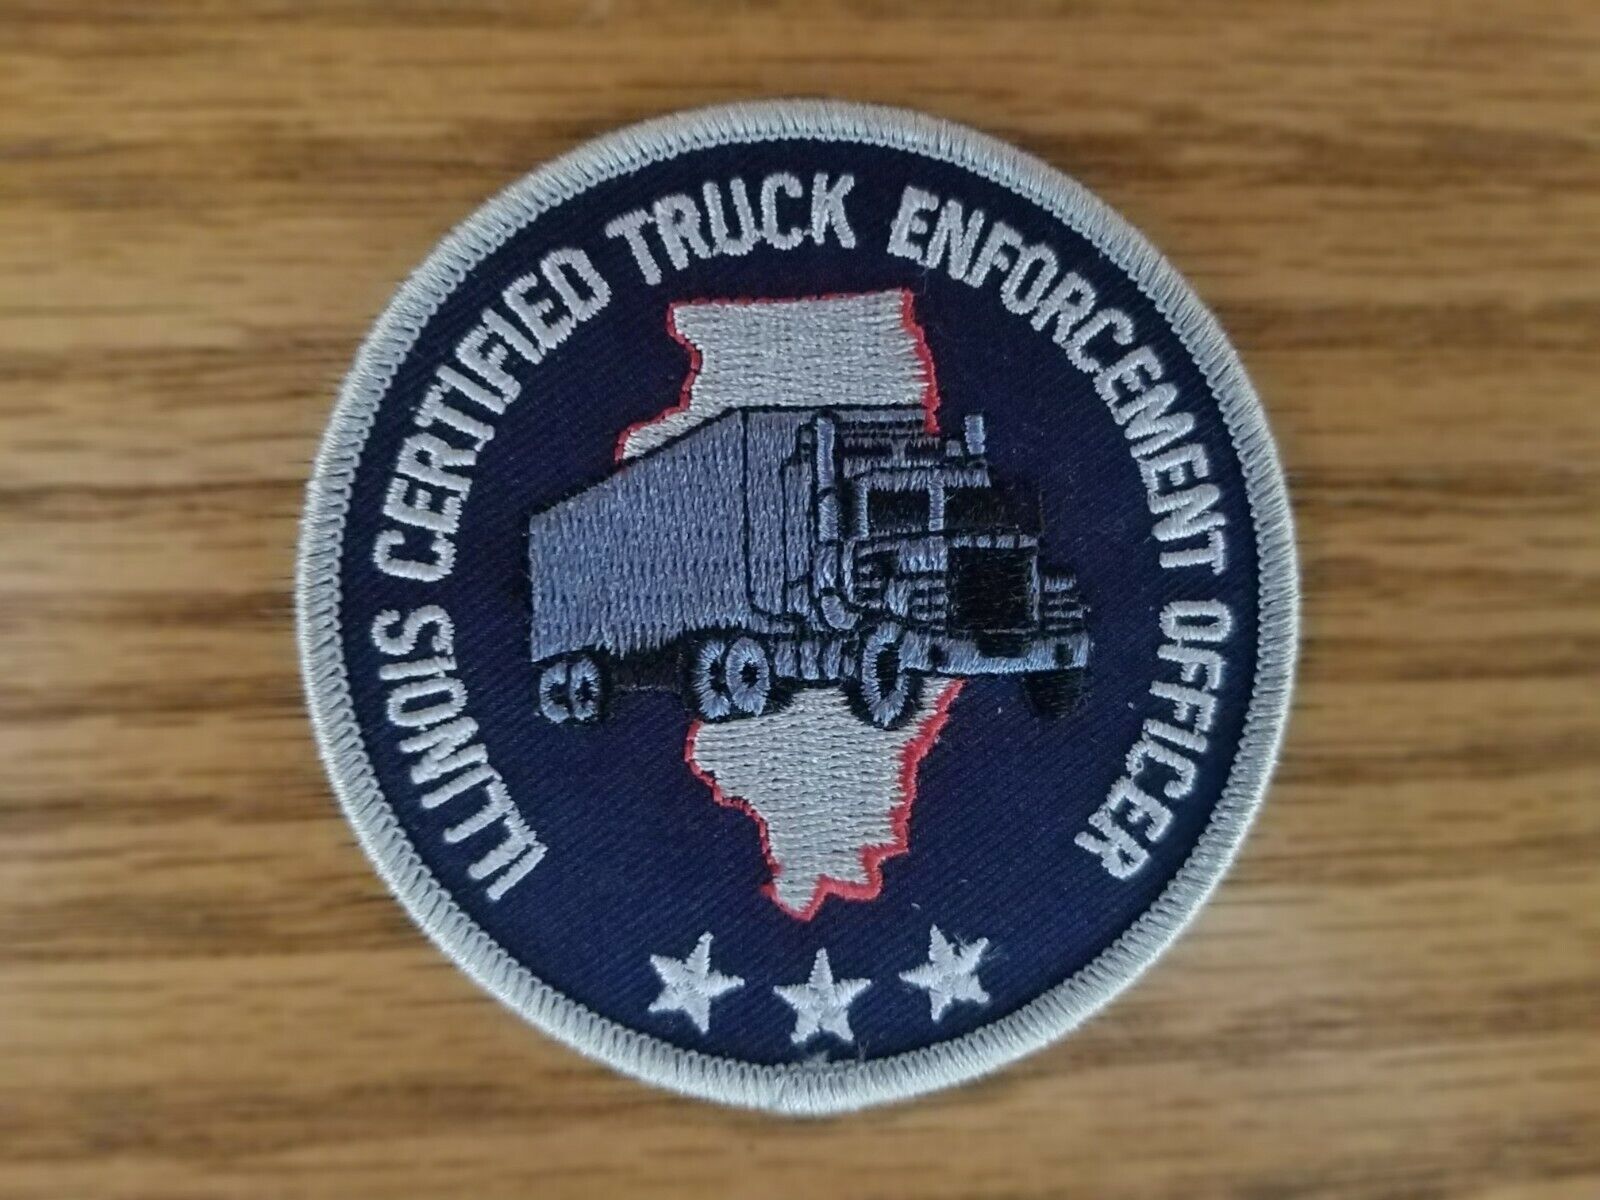 Illinois Certified Truck Enforcement Officer uniform patch